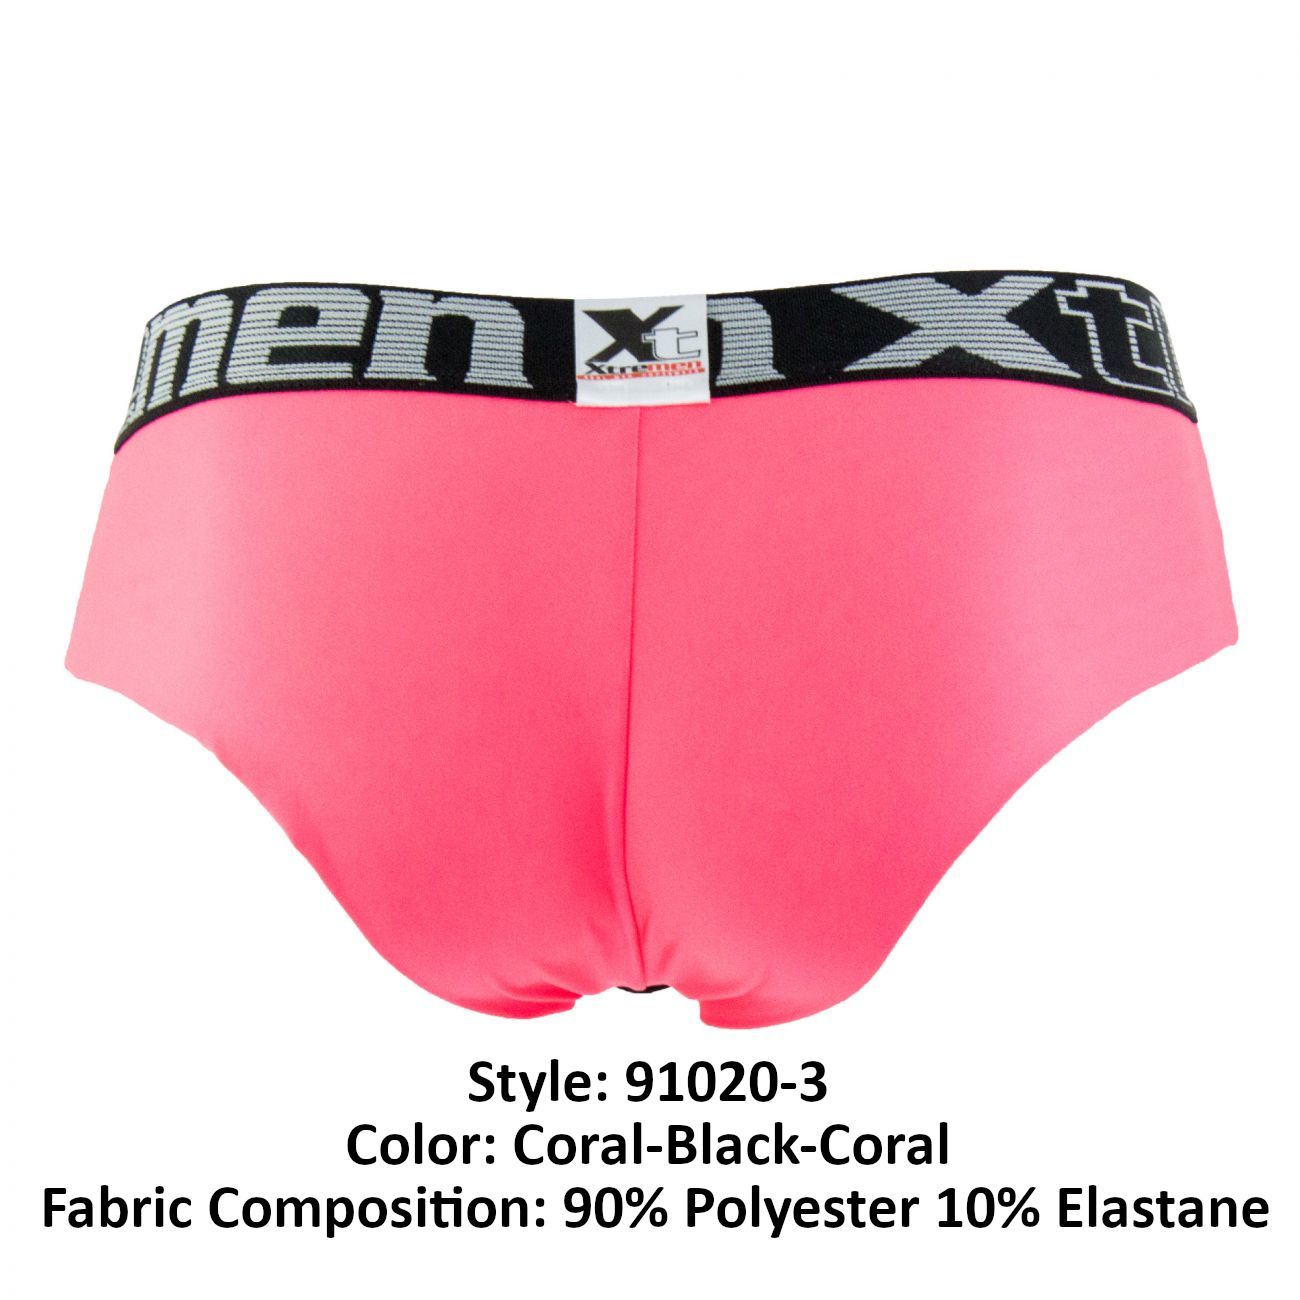 Xtremen 91020-3 3PK Briefs Coral-Black-Coral